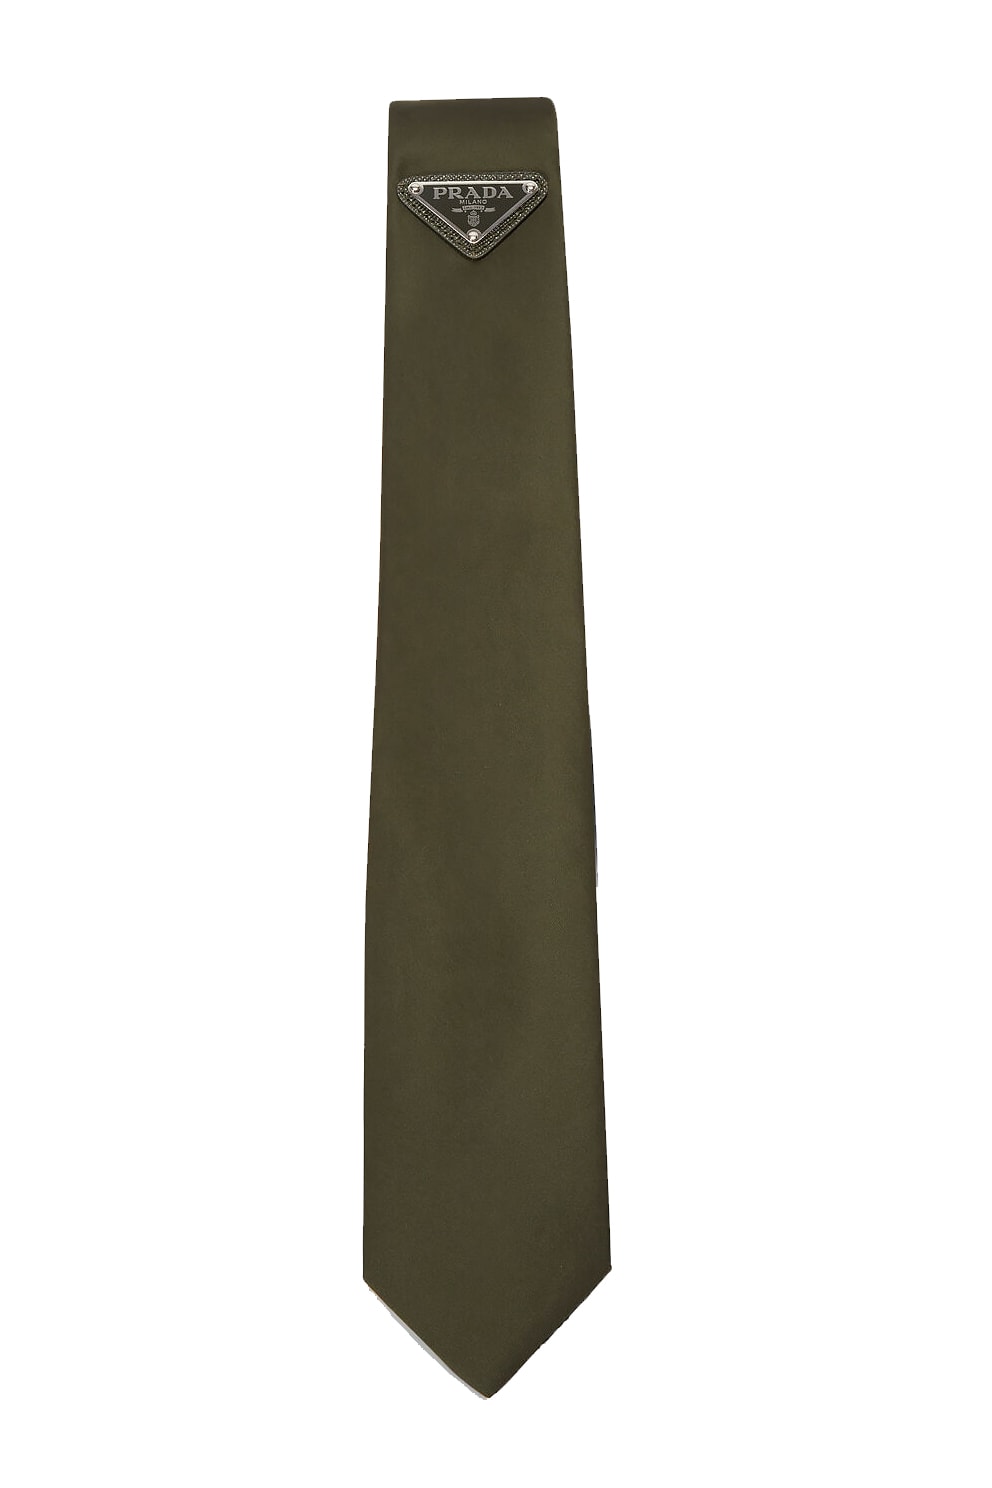 Prada Gabardine Nylon Triangle Logo Tie in Green accessories Italian Ties 